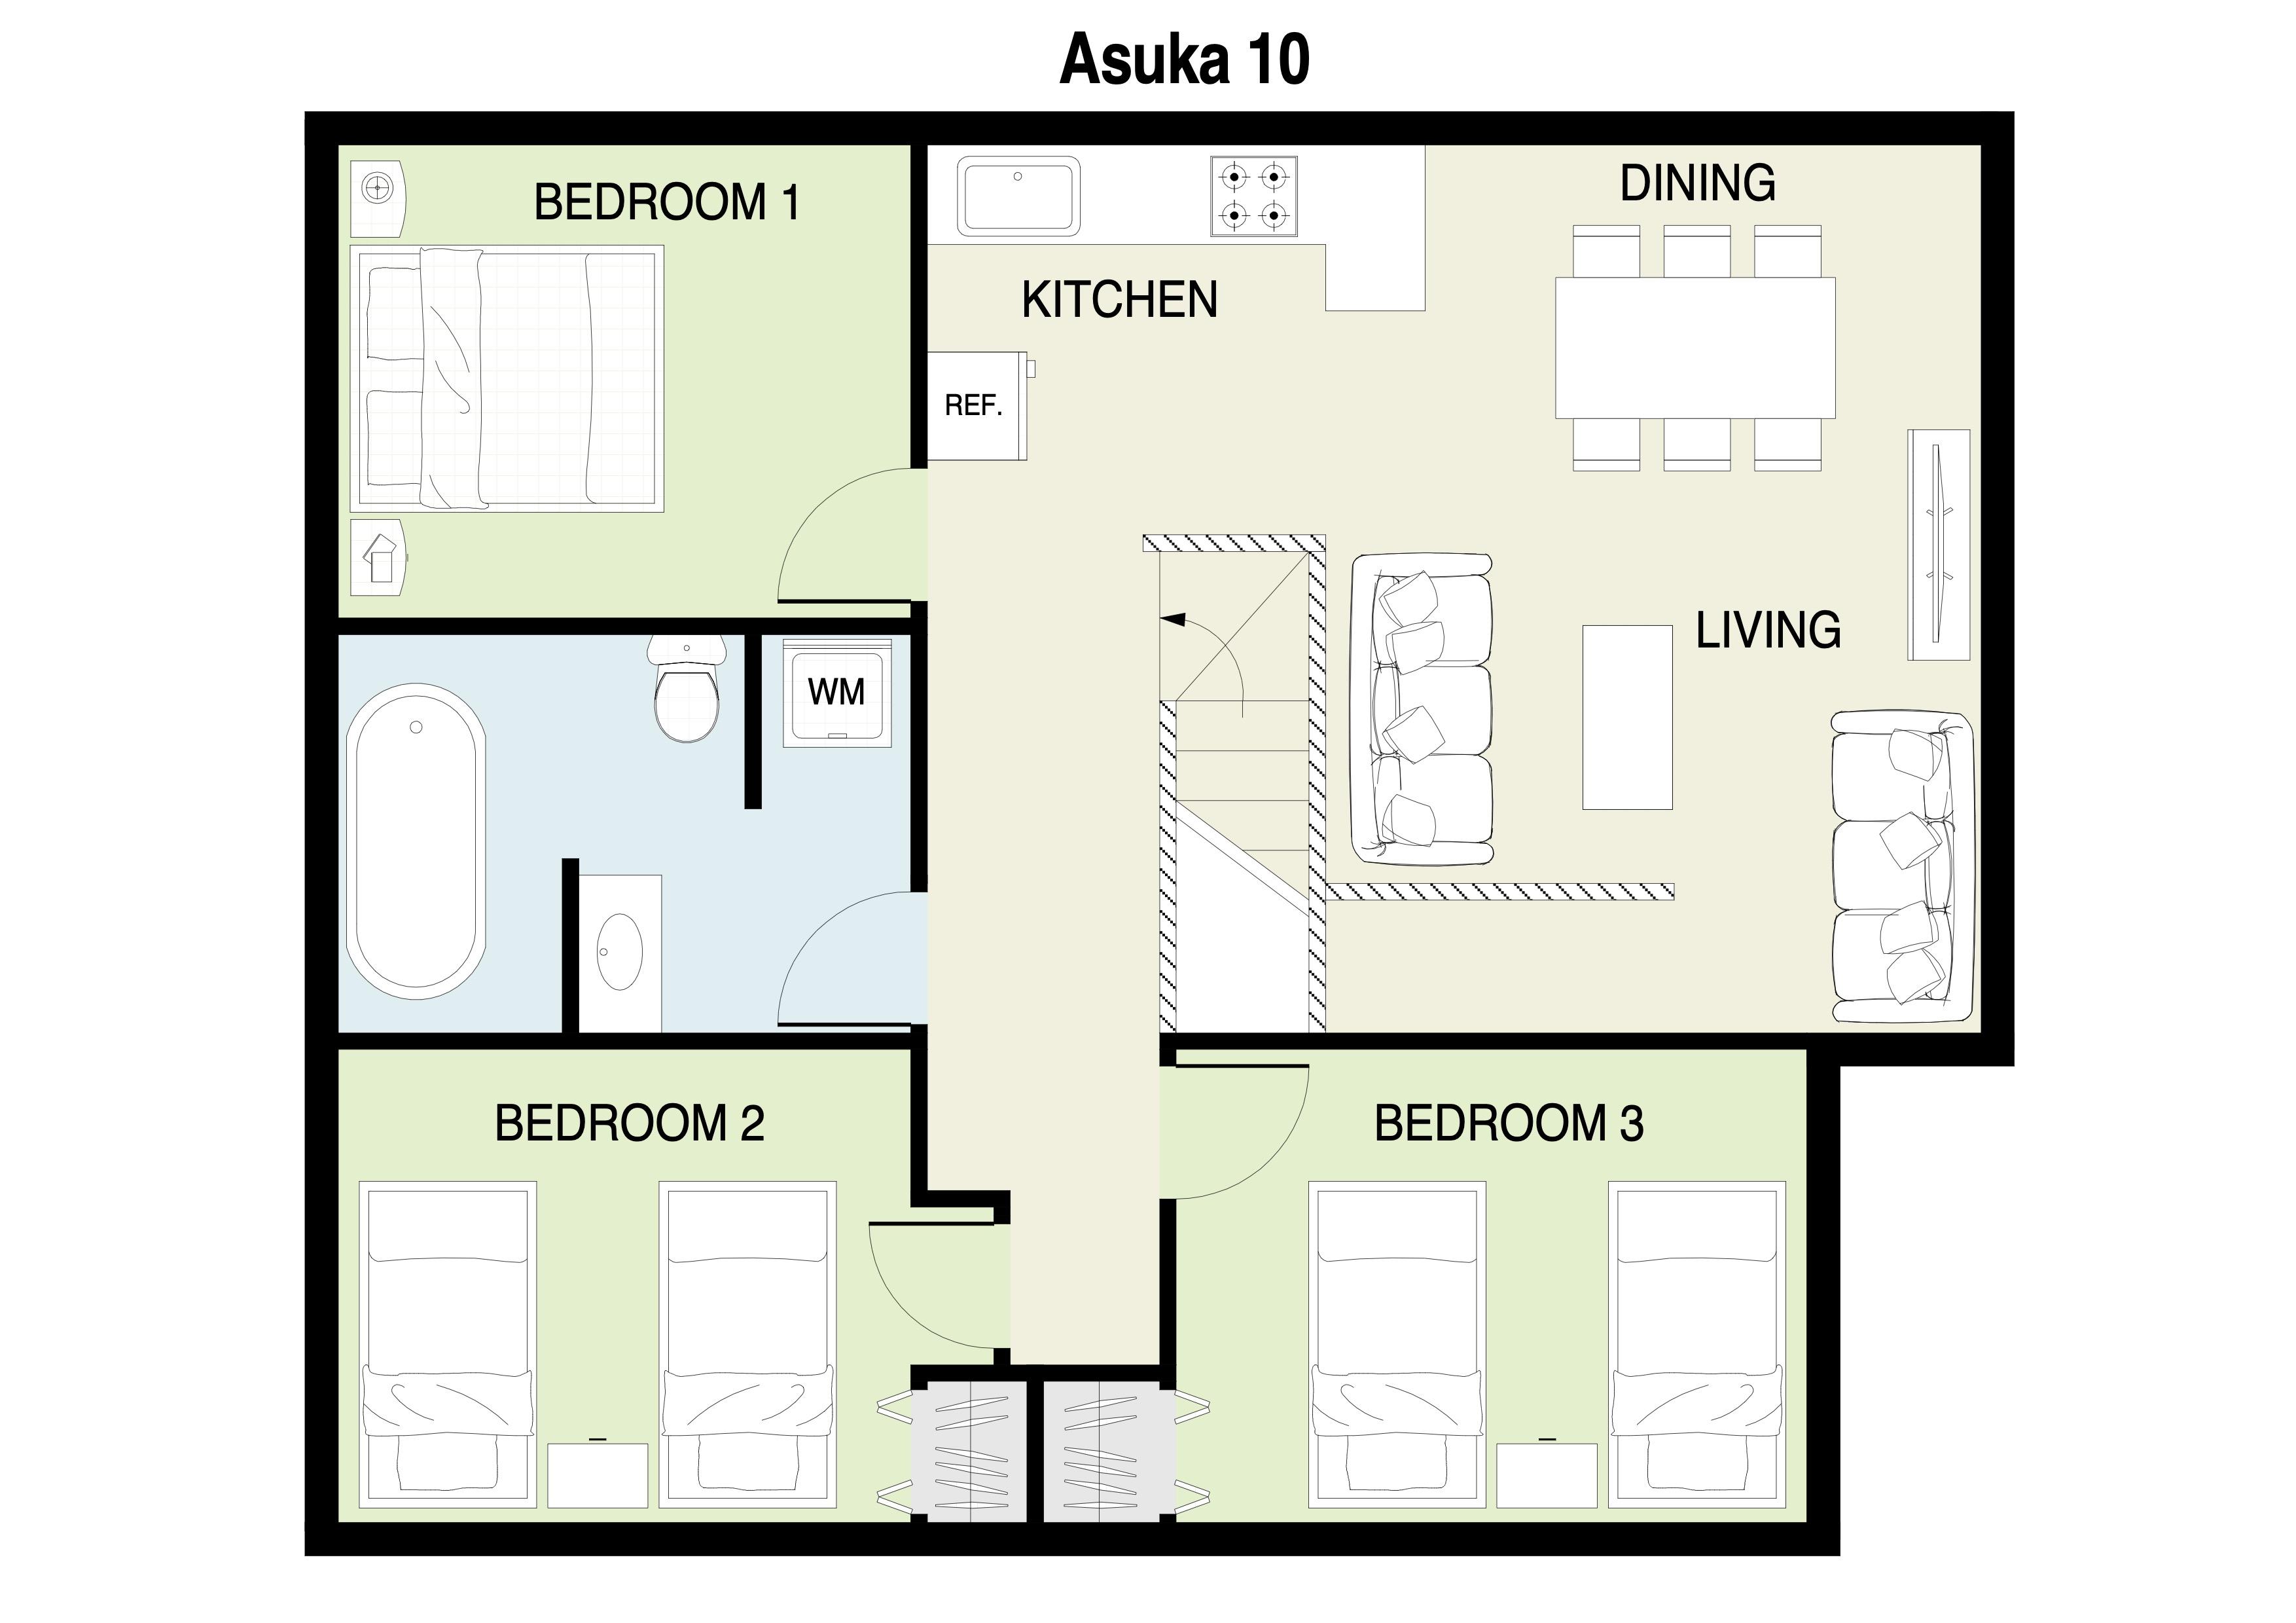 Asuka 10 Floor Plan